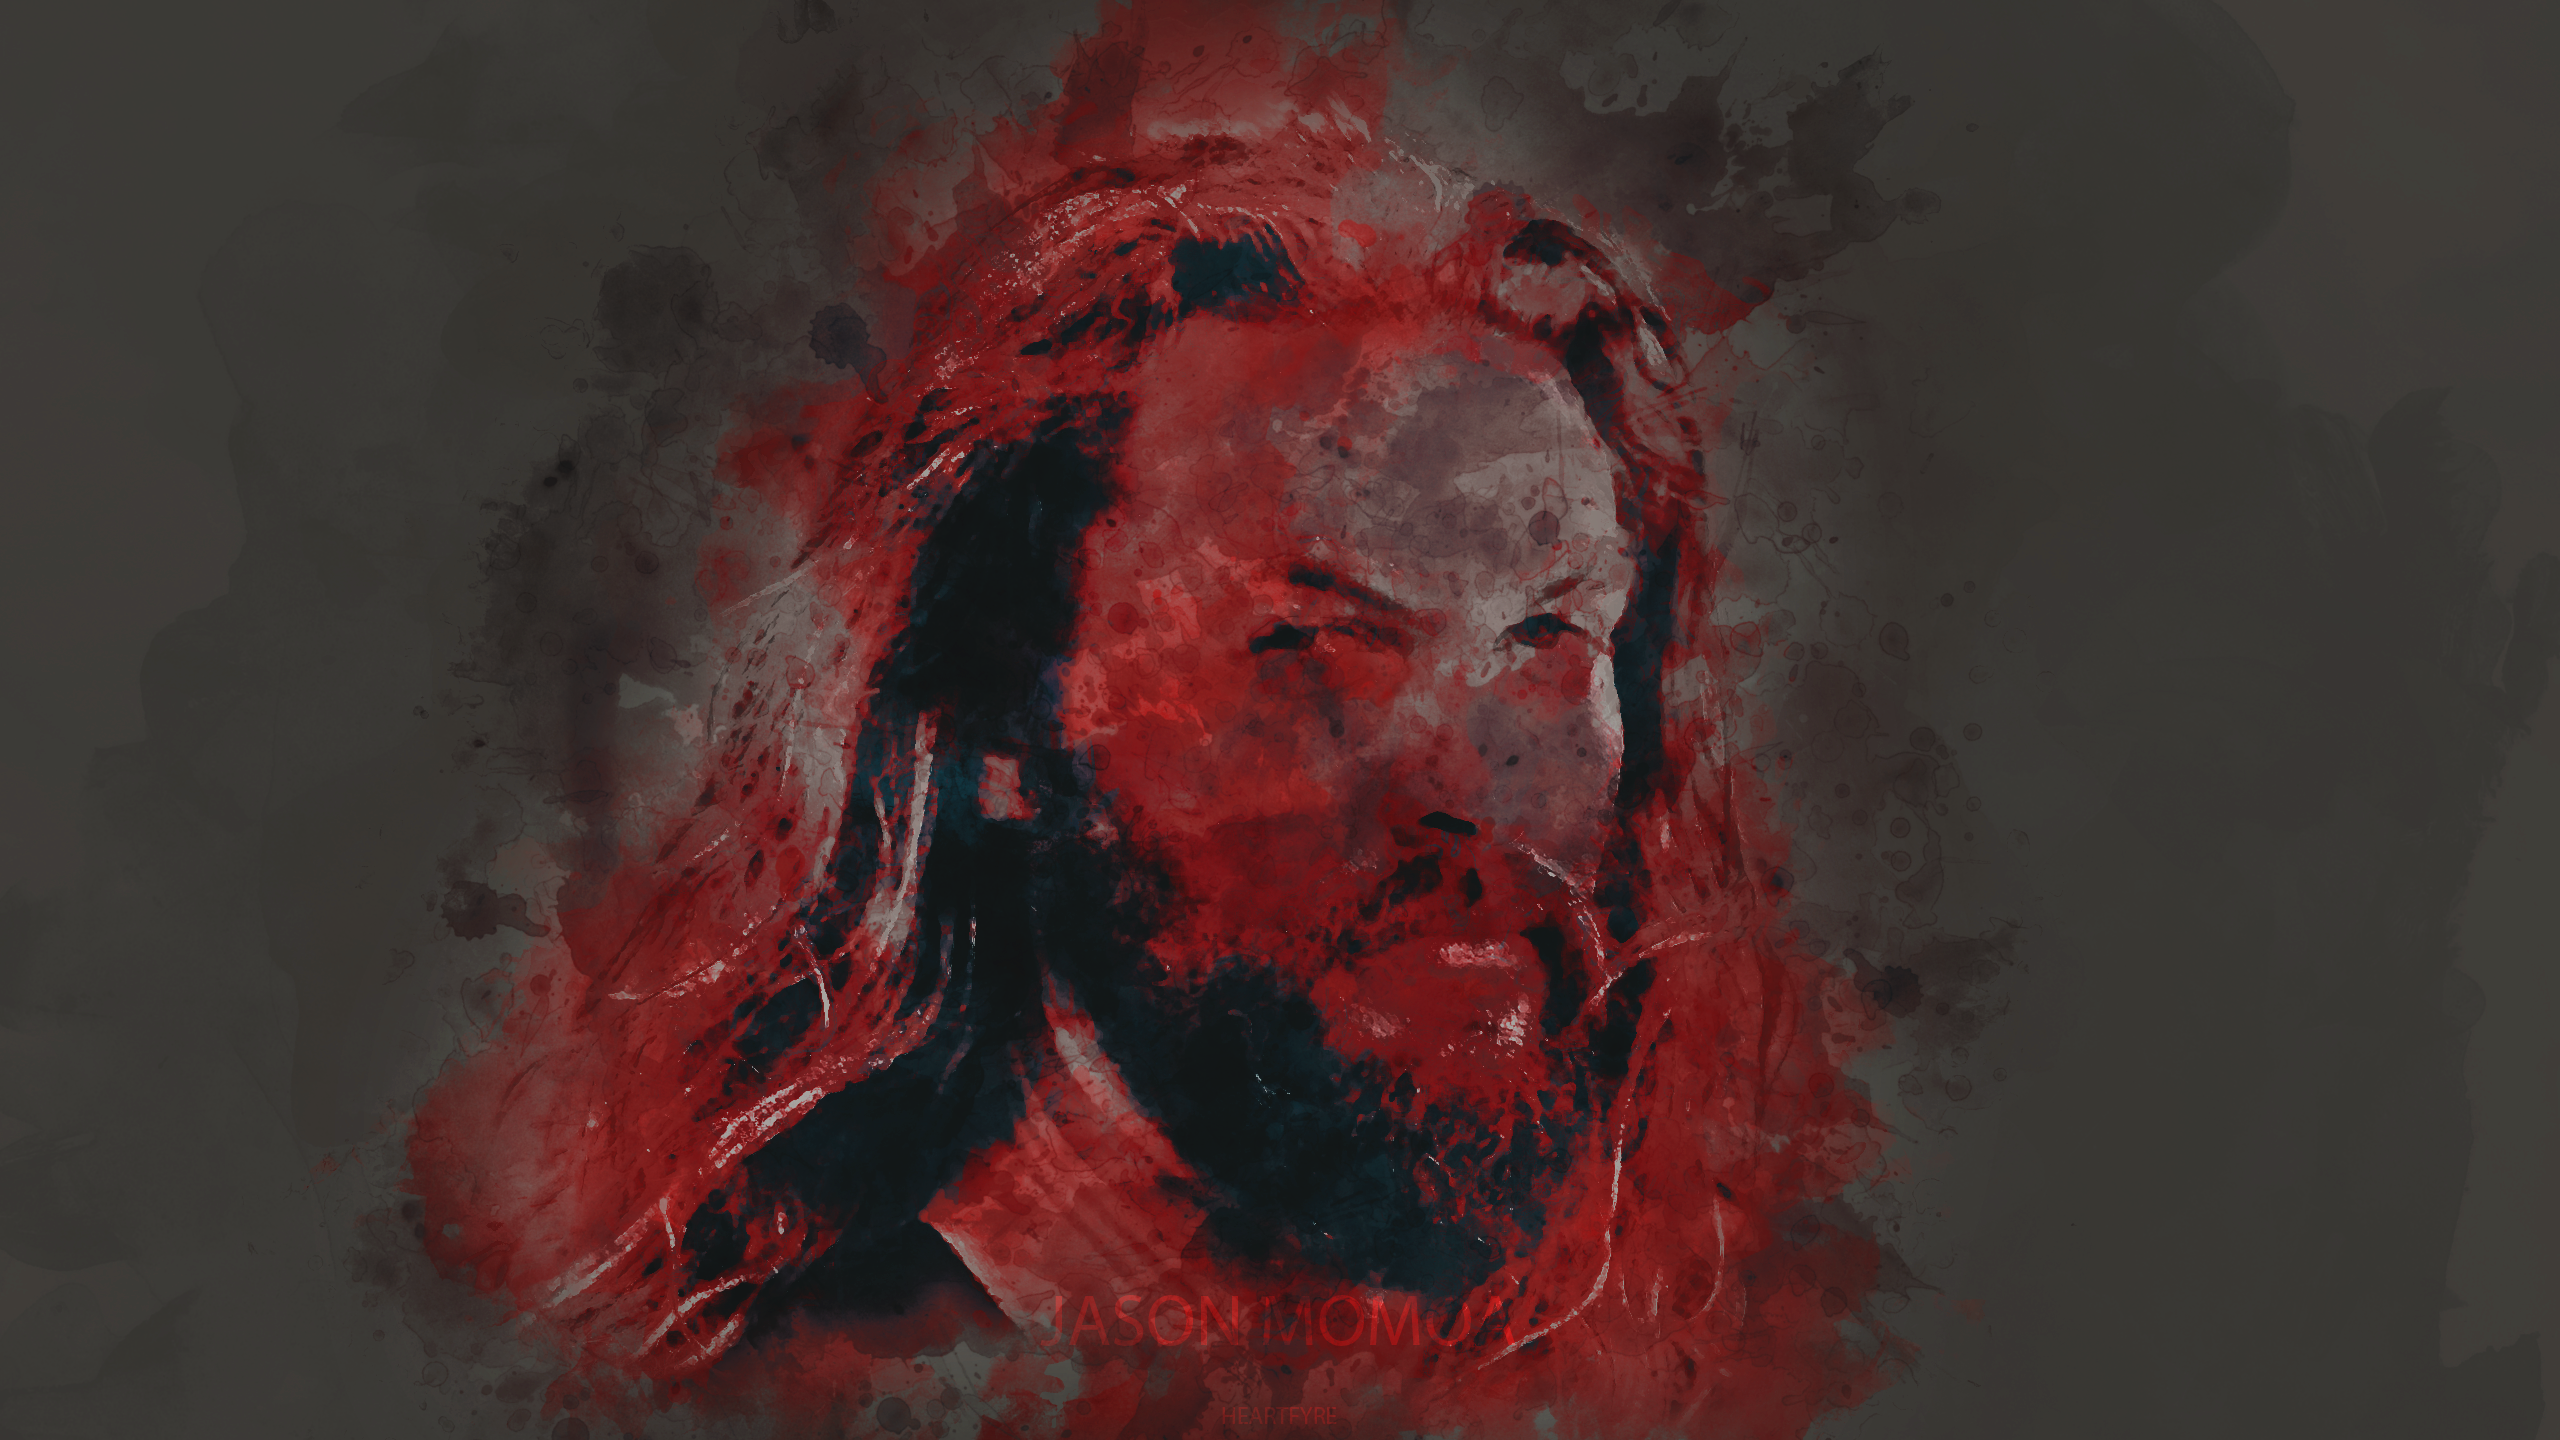 People 2560x1440 watercolor Jason Momoa red portrait actor celebrity digital art closeup